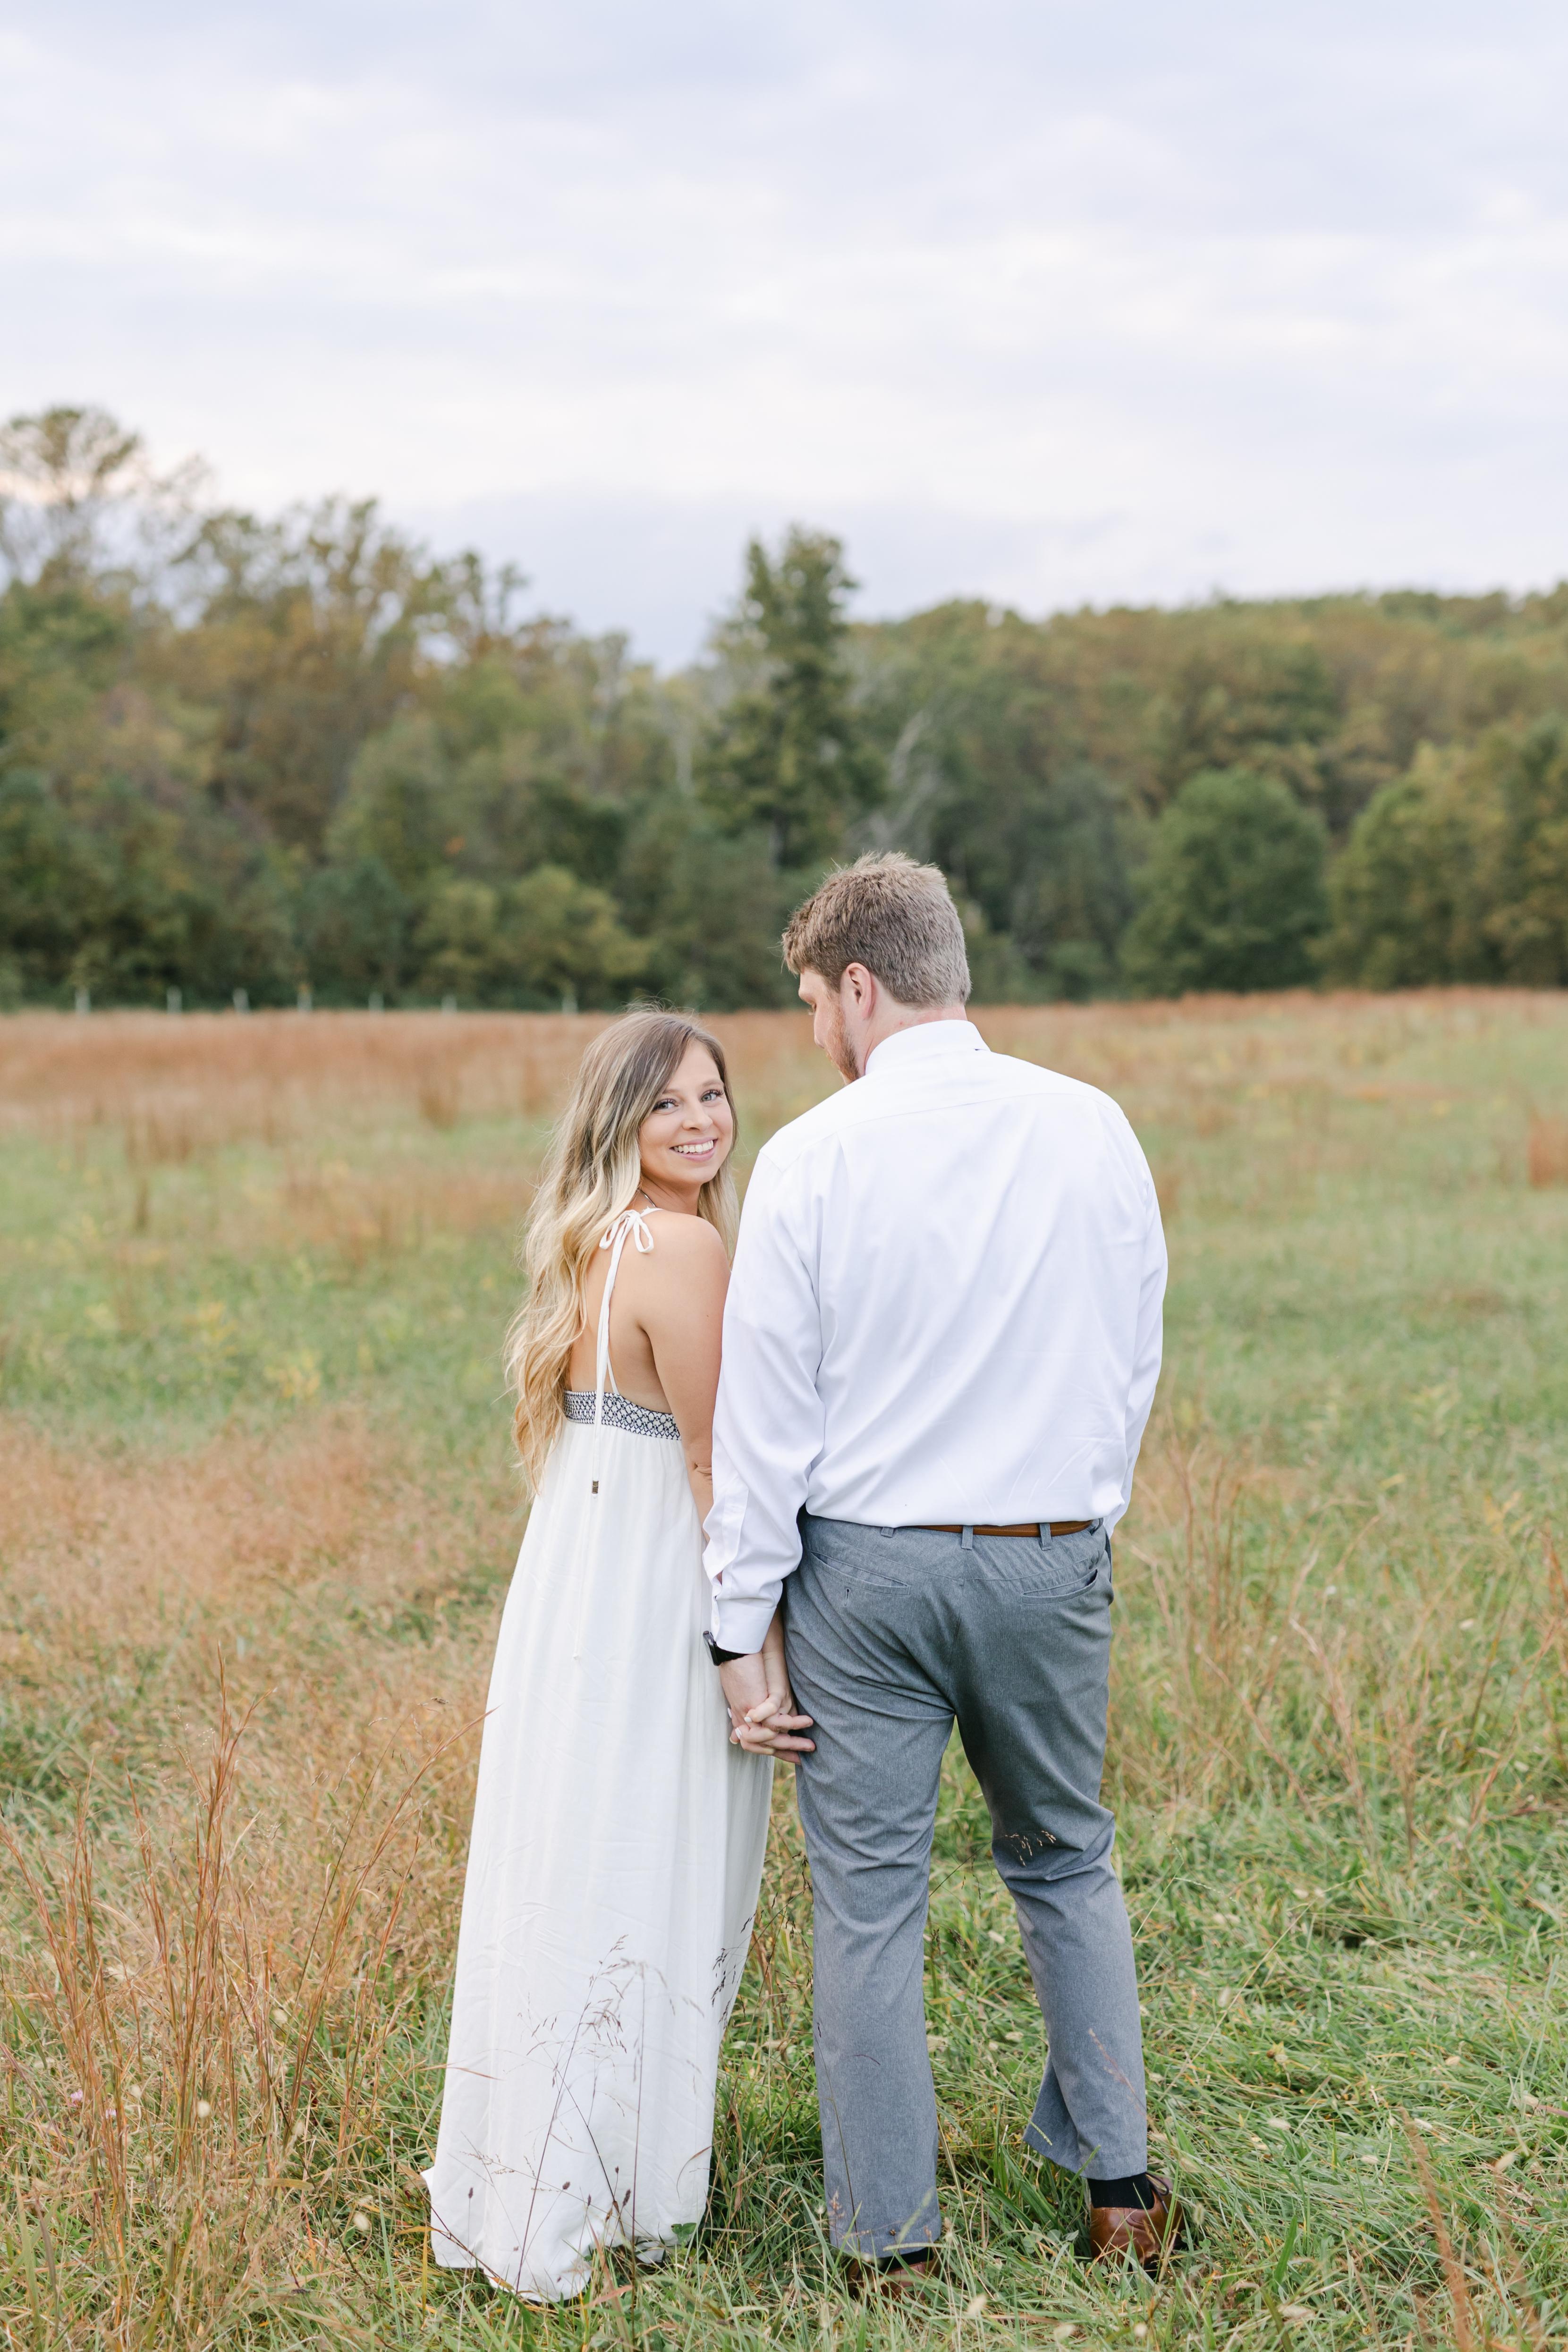 The Wedding Website of Madison Schutz and Christian Scott